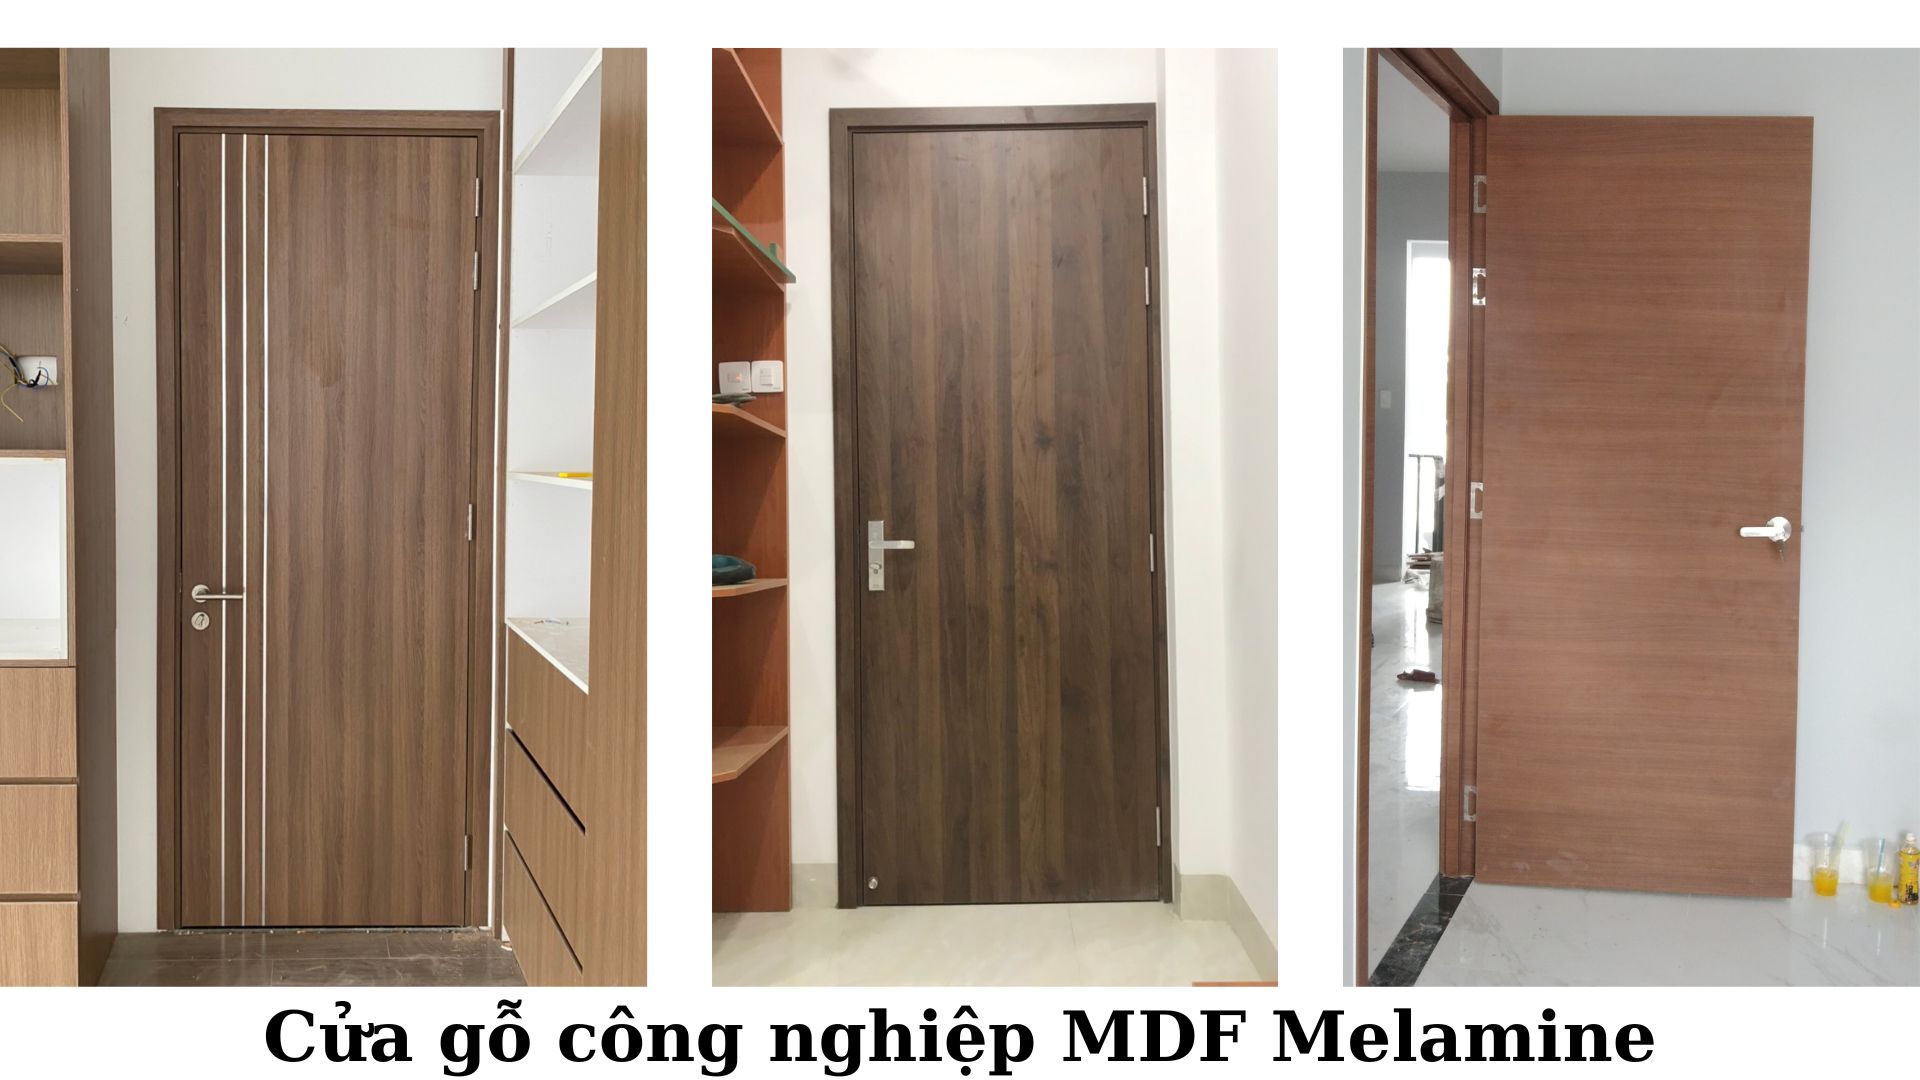 Cua-go-cong-nghiep-MDF-Melamine.jpg